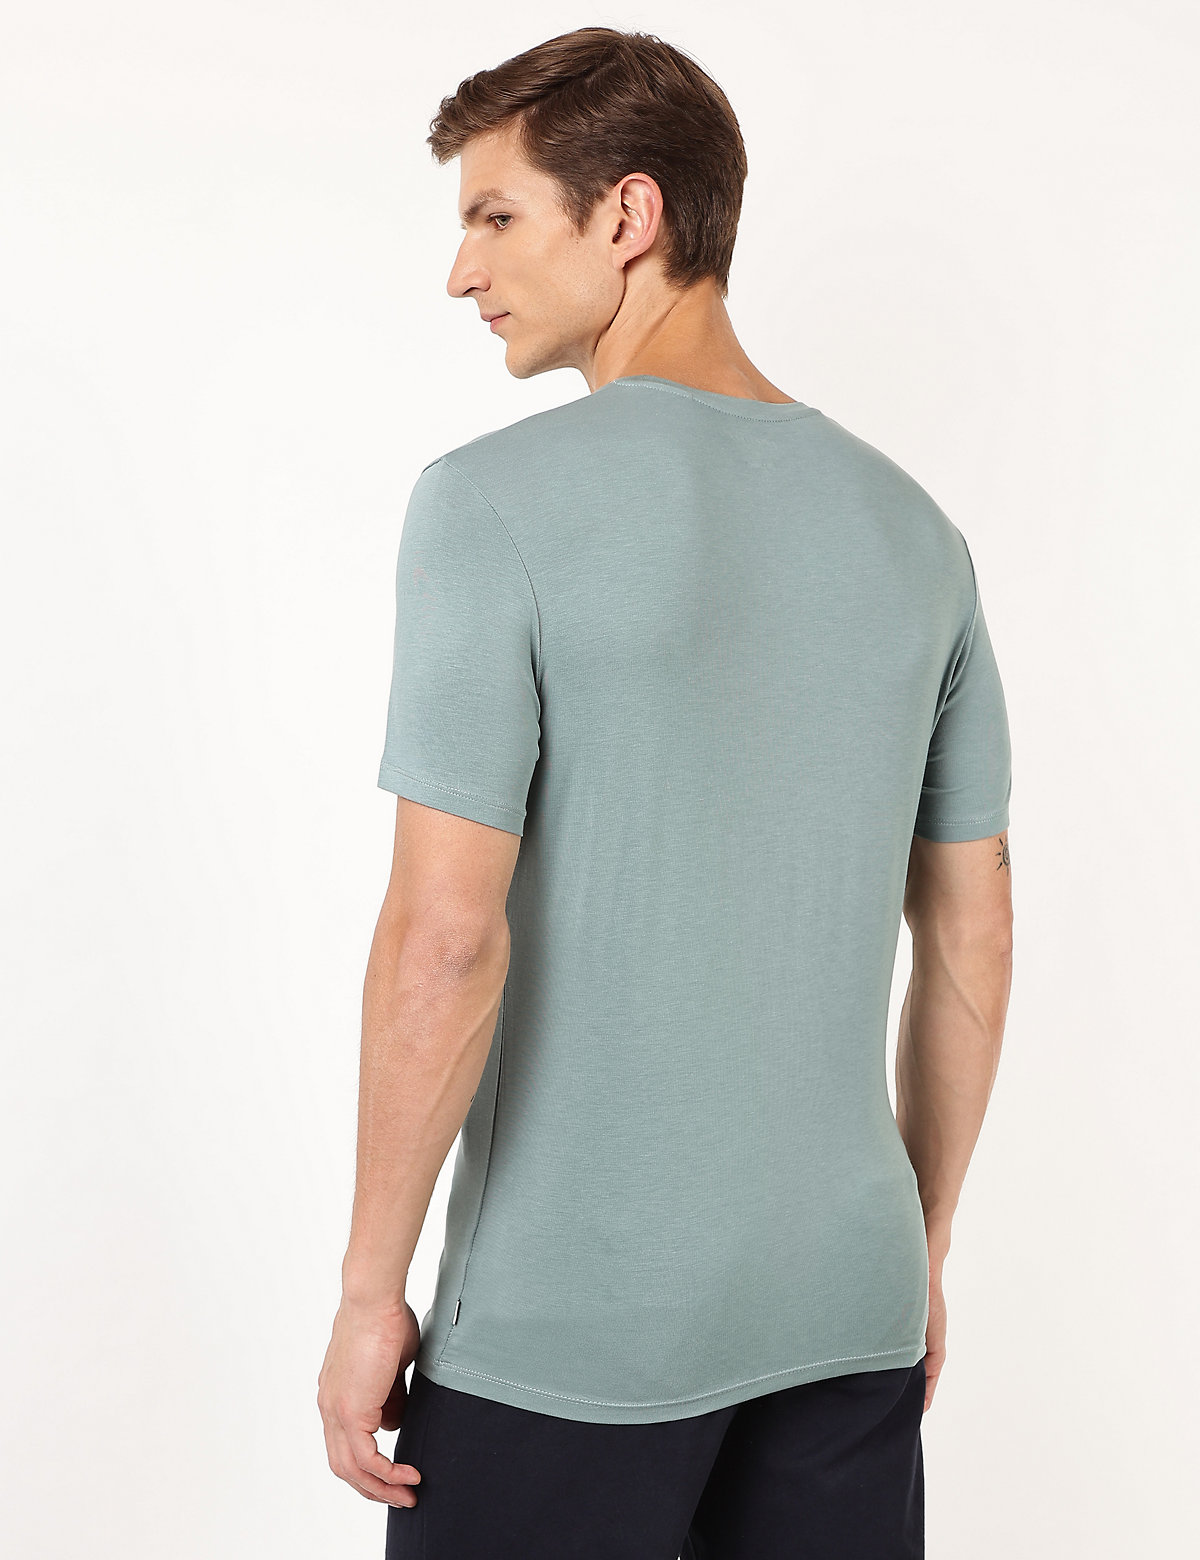 Cotton Blend Round Neck Solid T-Shirt